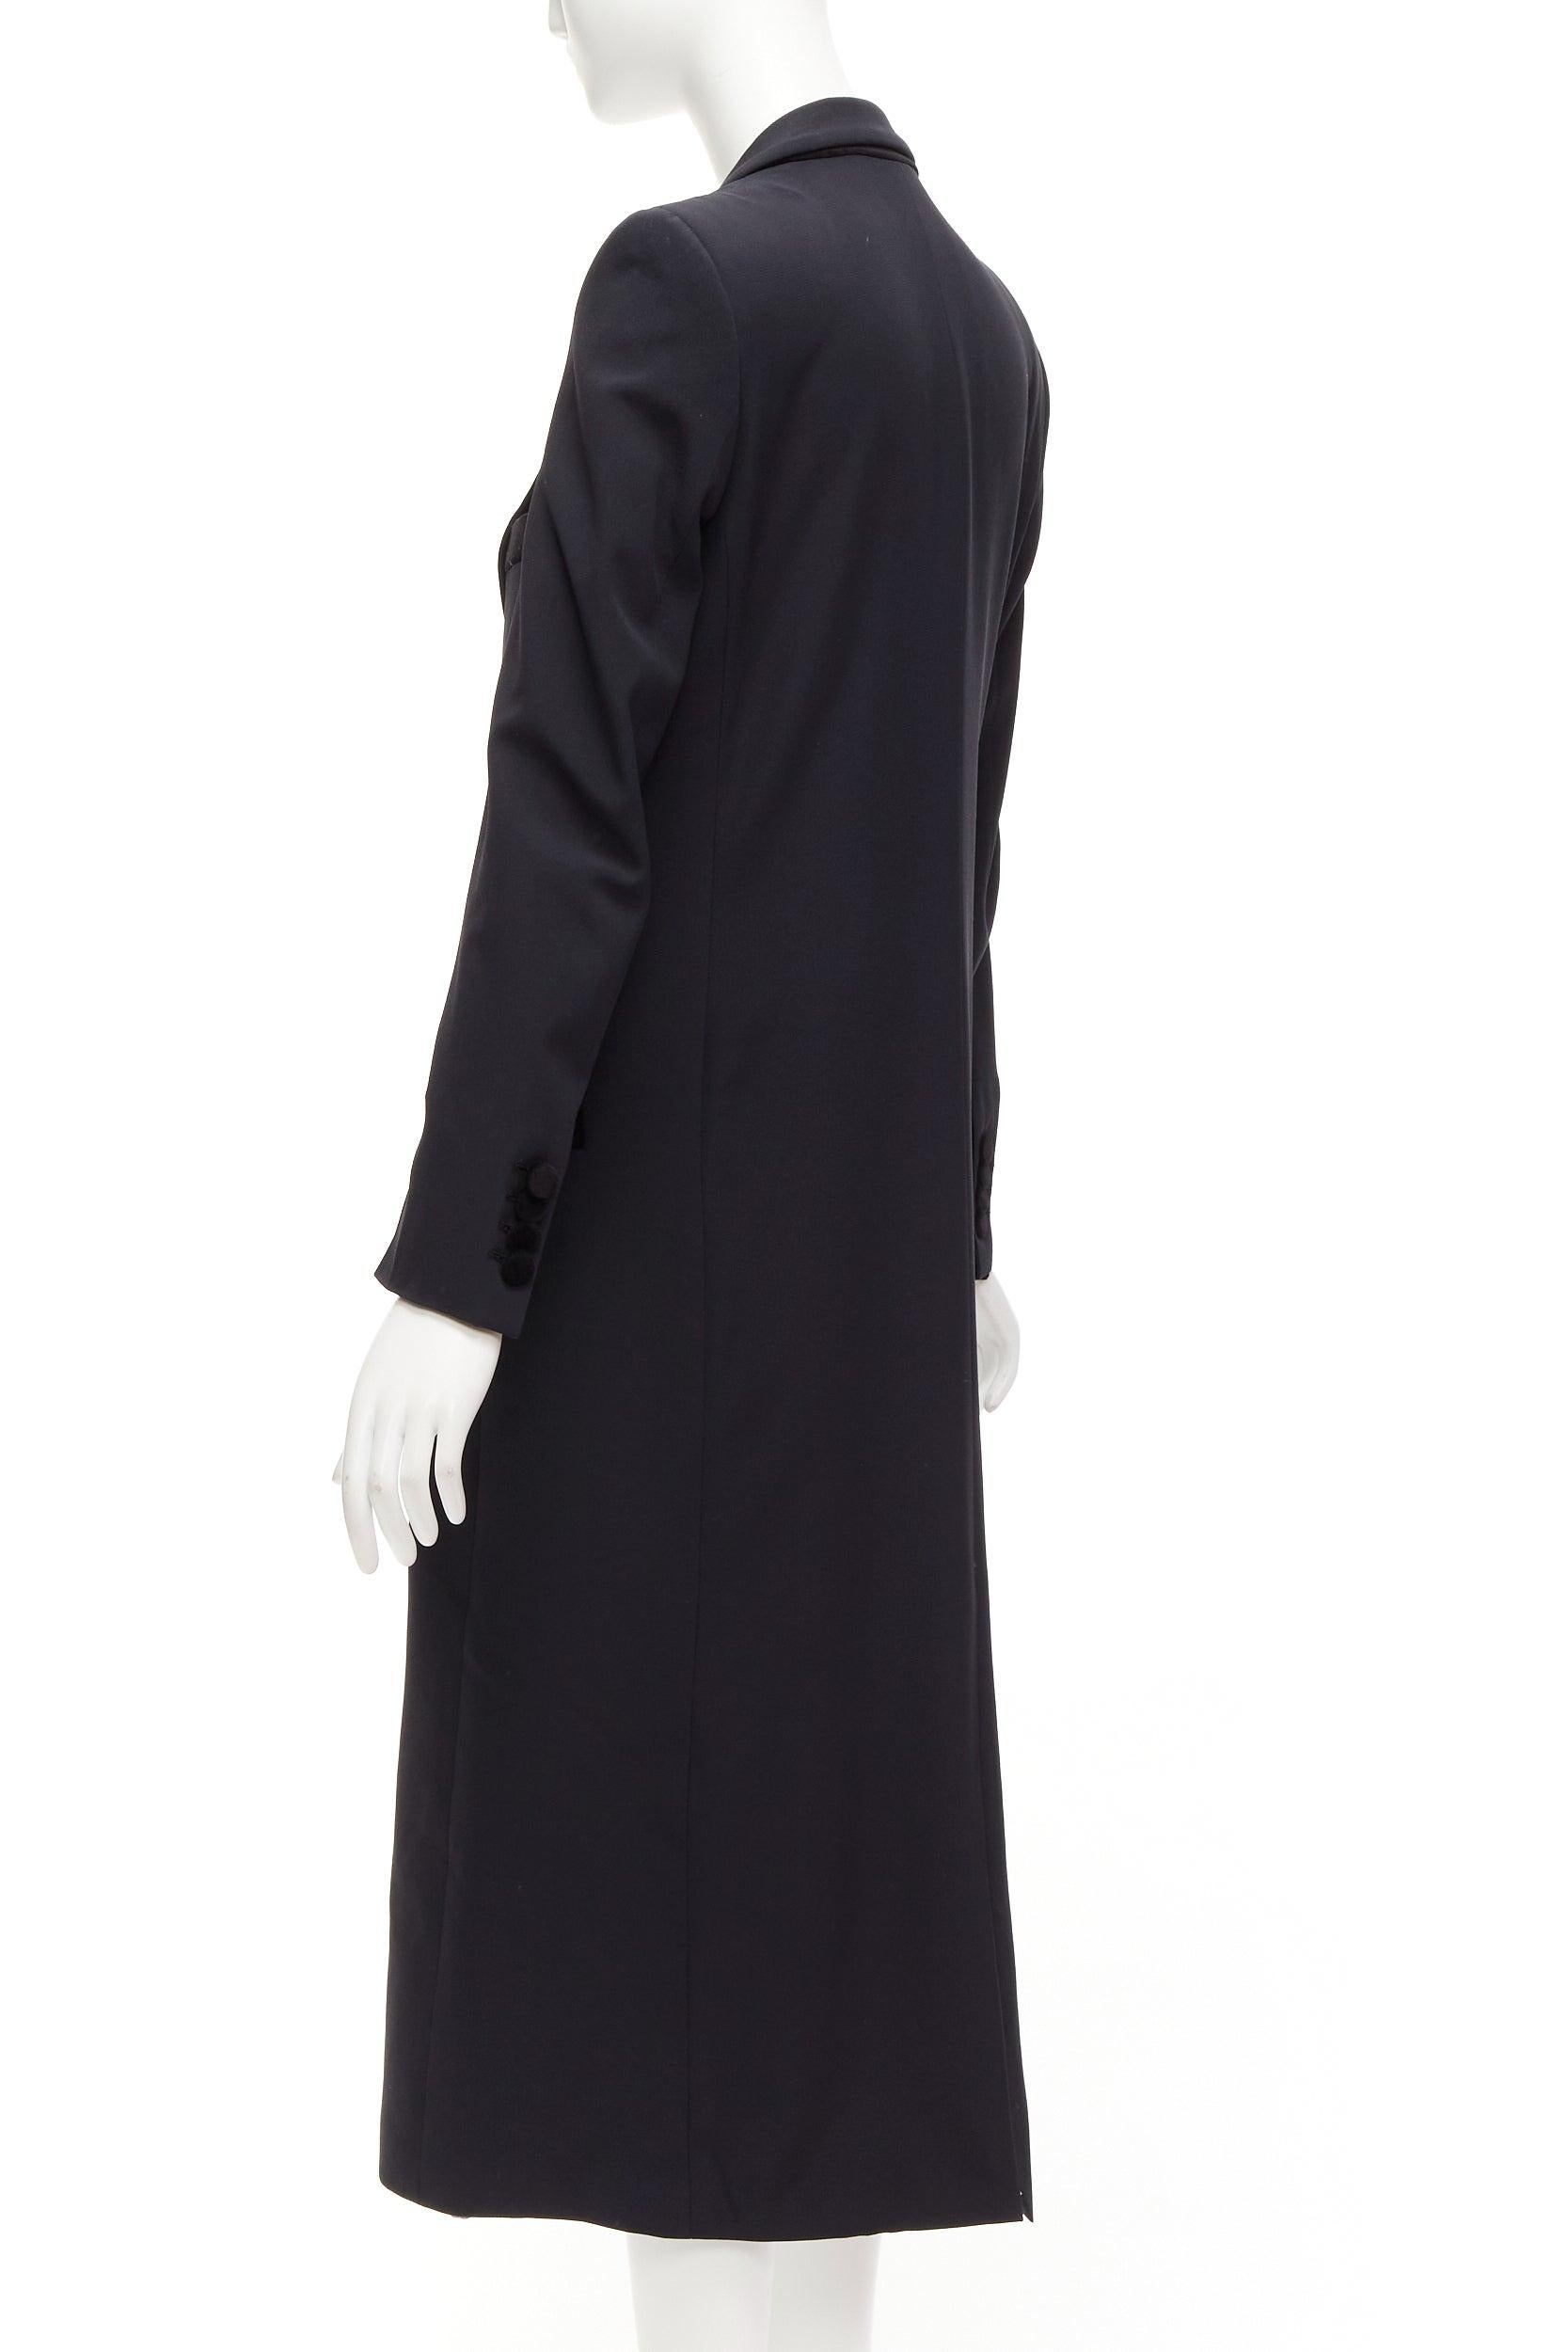 BLAZE MILANO Blazer Dress black curved pockets double breasted coat Sz.1 XS For Sale 3